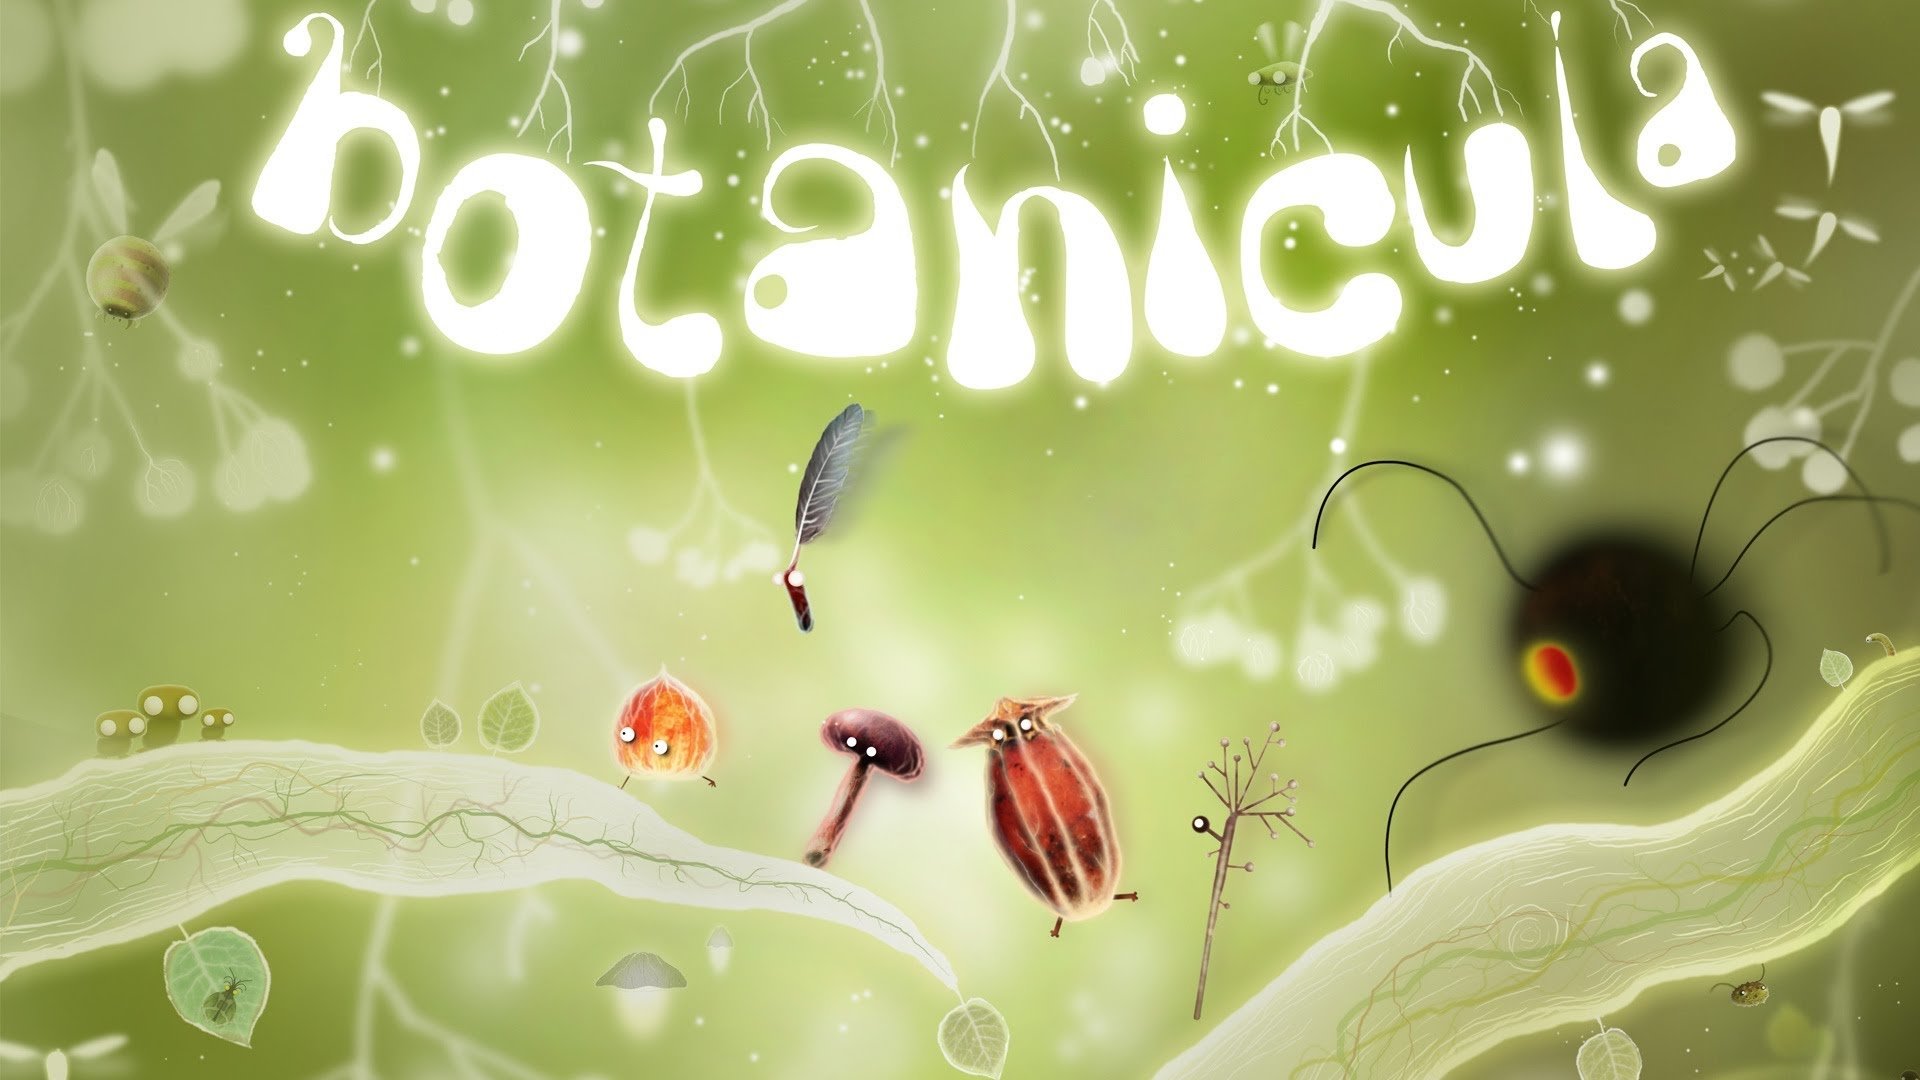 botanicula, Point and click, Adventure, Graphic, Fantasy, Family, Bokeh Wallpaper